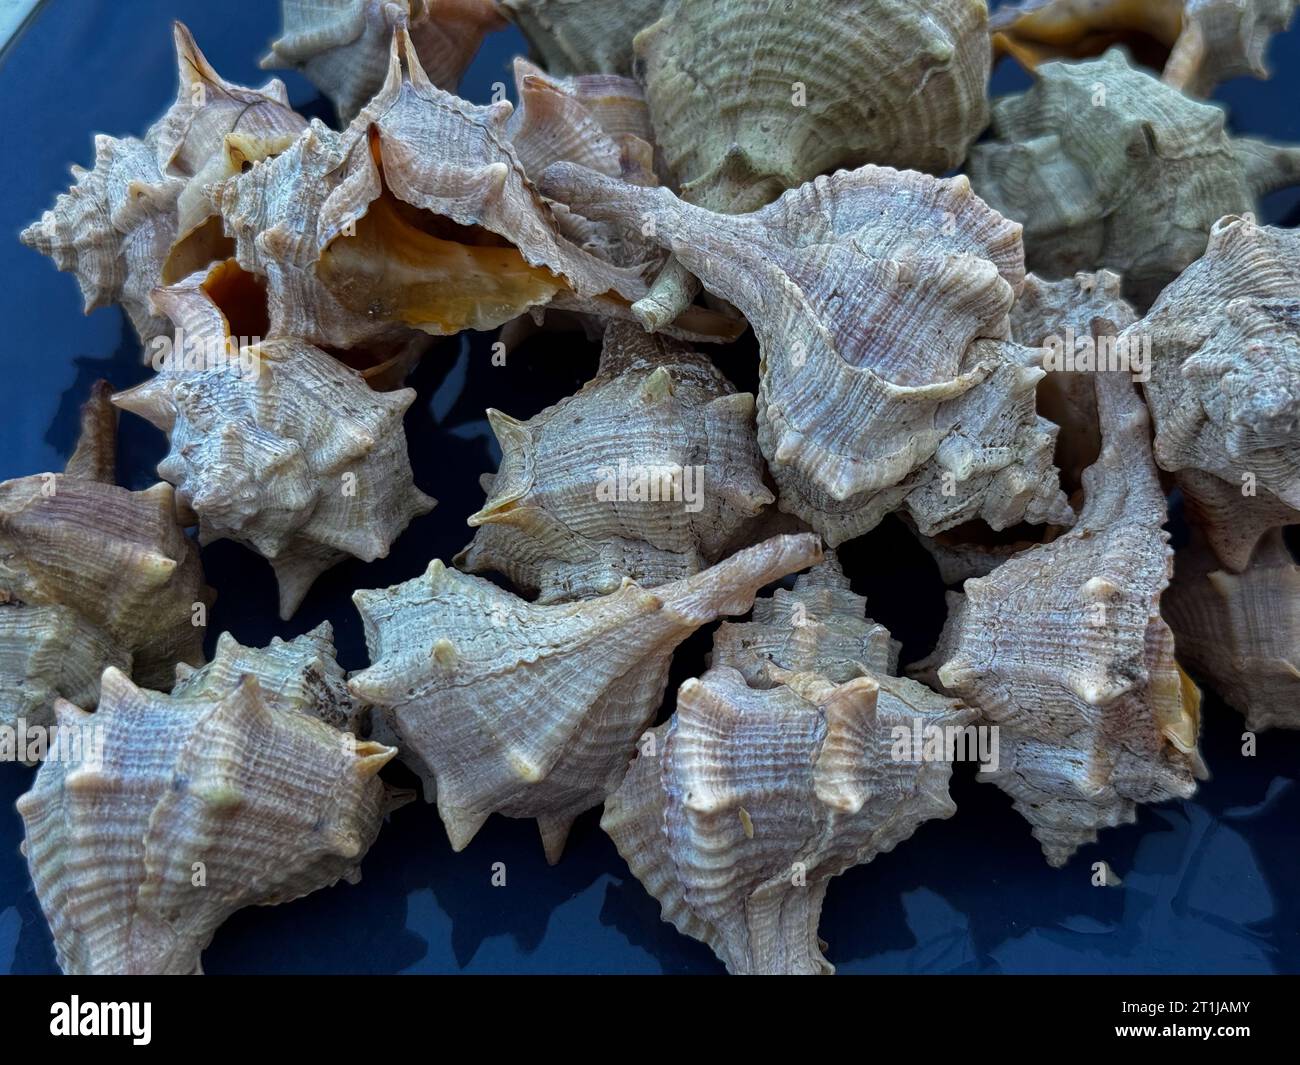 Bolinus brandaris or murici, Plate of seafood morsels with lemon, boiled sea snails, Mediterranean Food Stock Photo